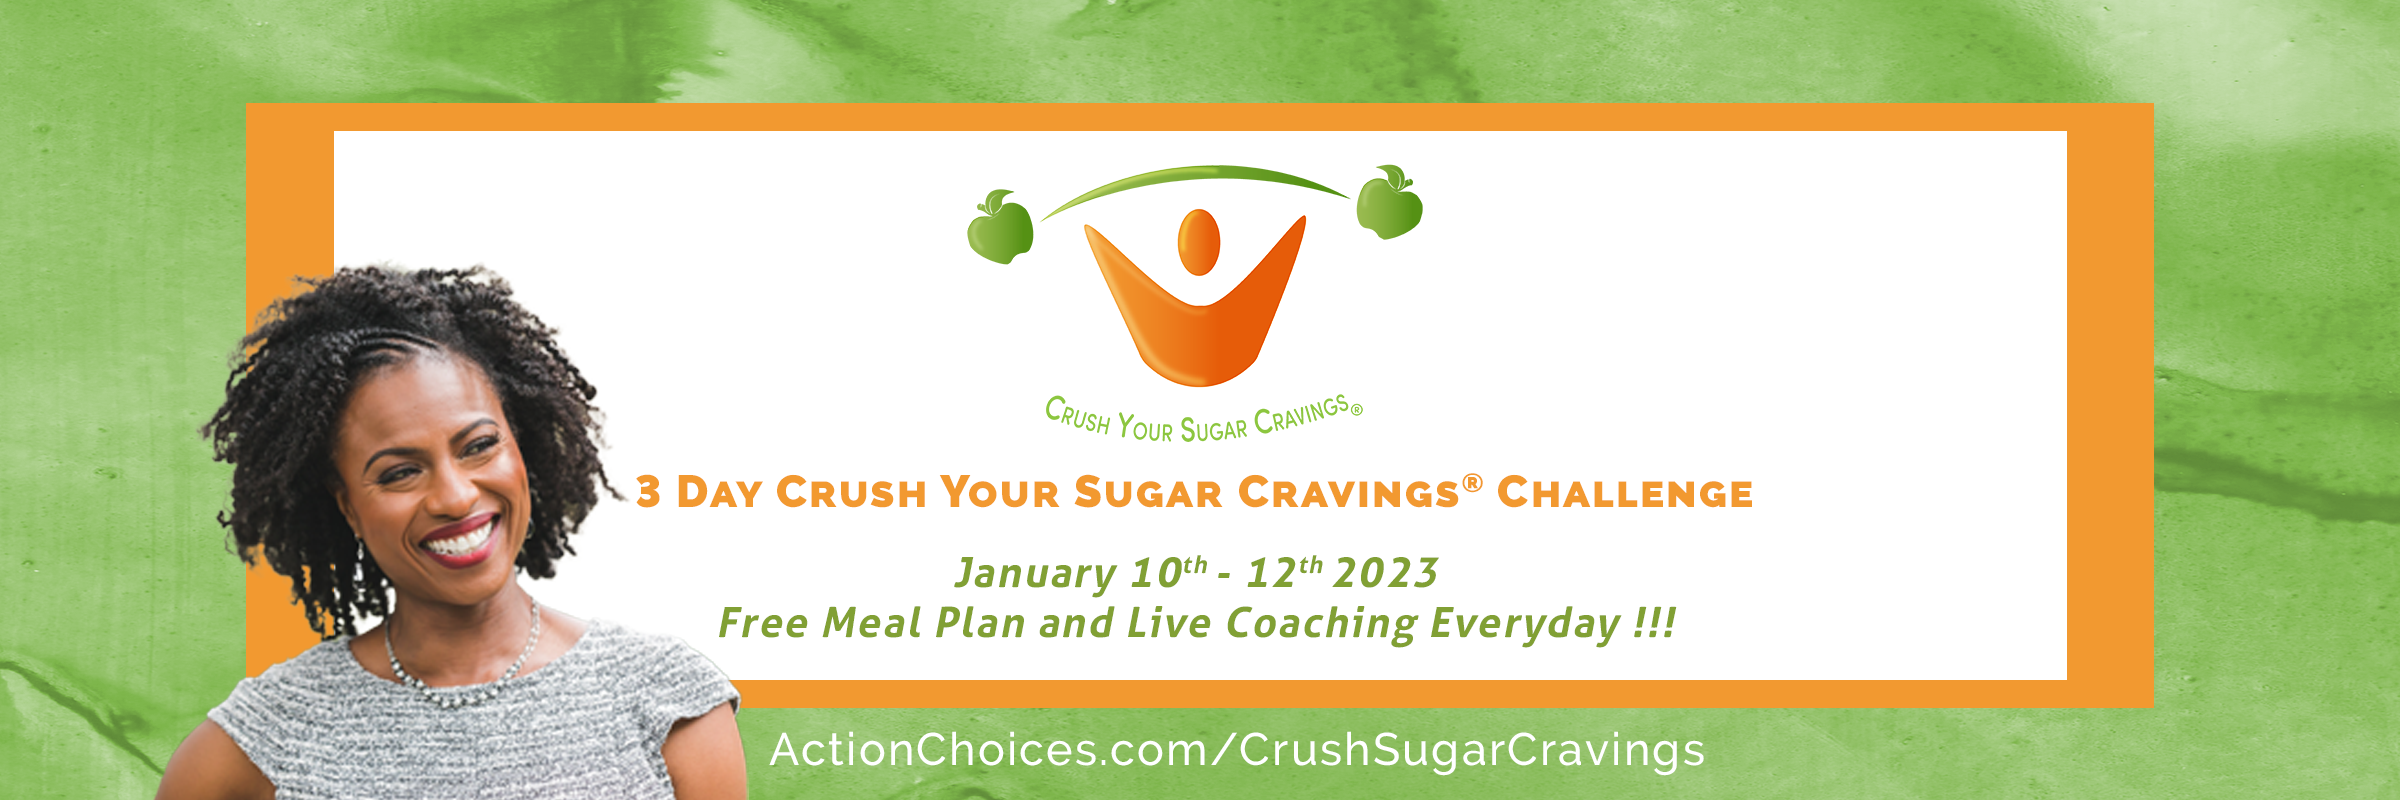 Crush-Sugar-Cravins-Challenge-(1)2nd-banner-image